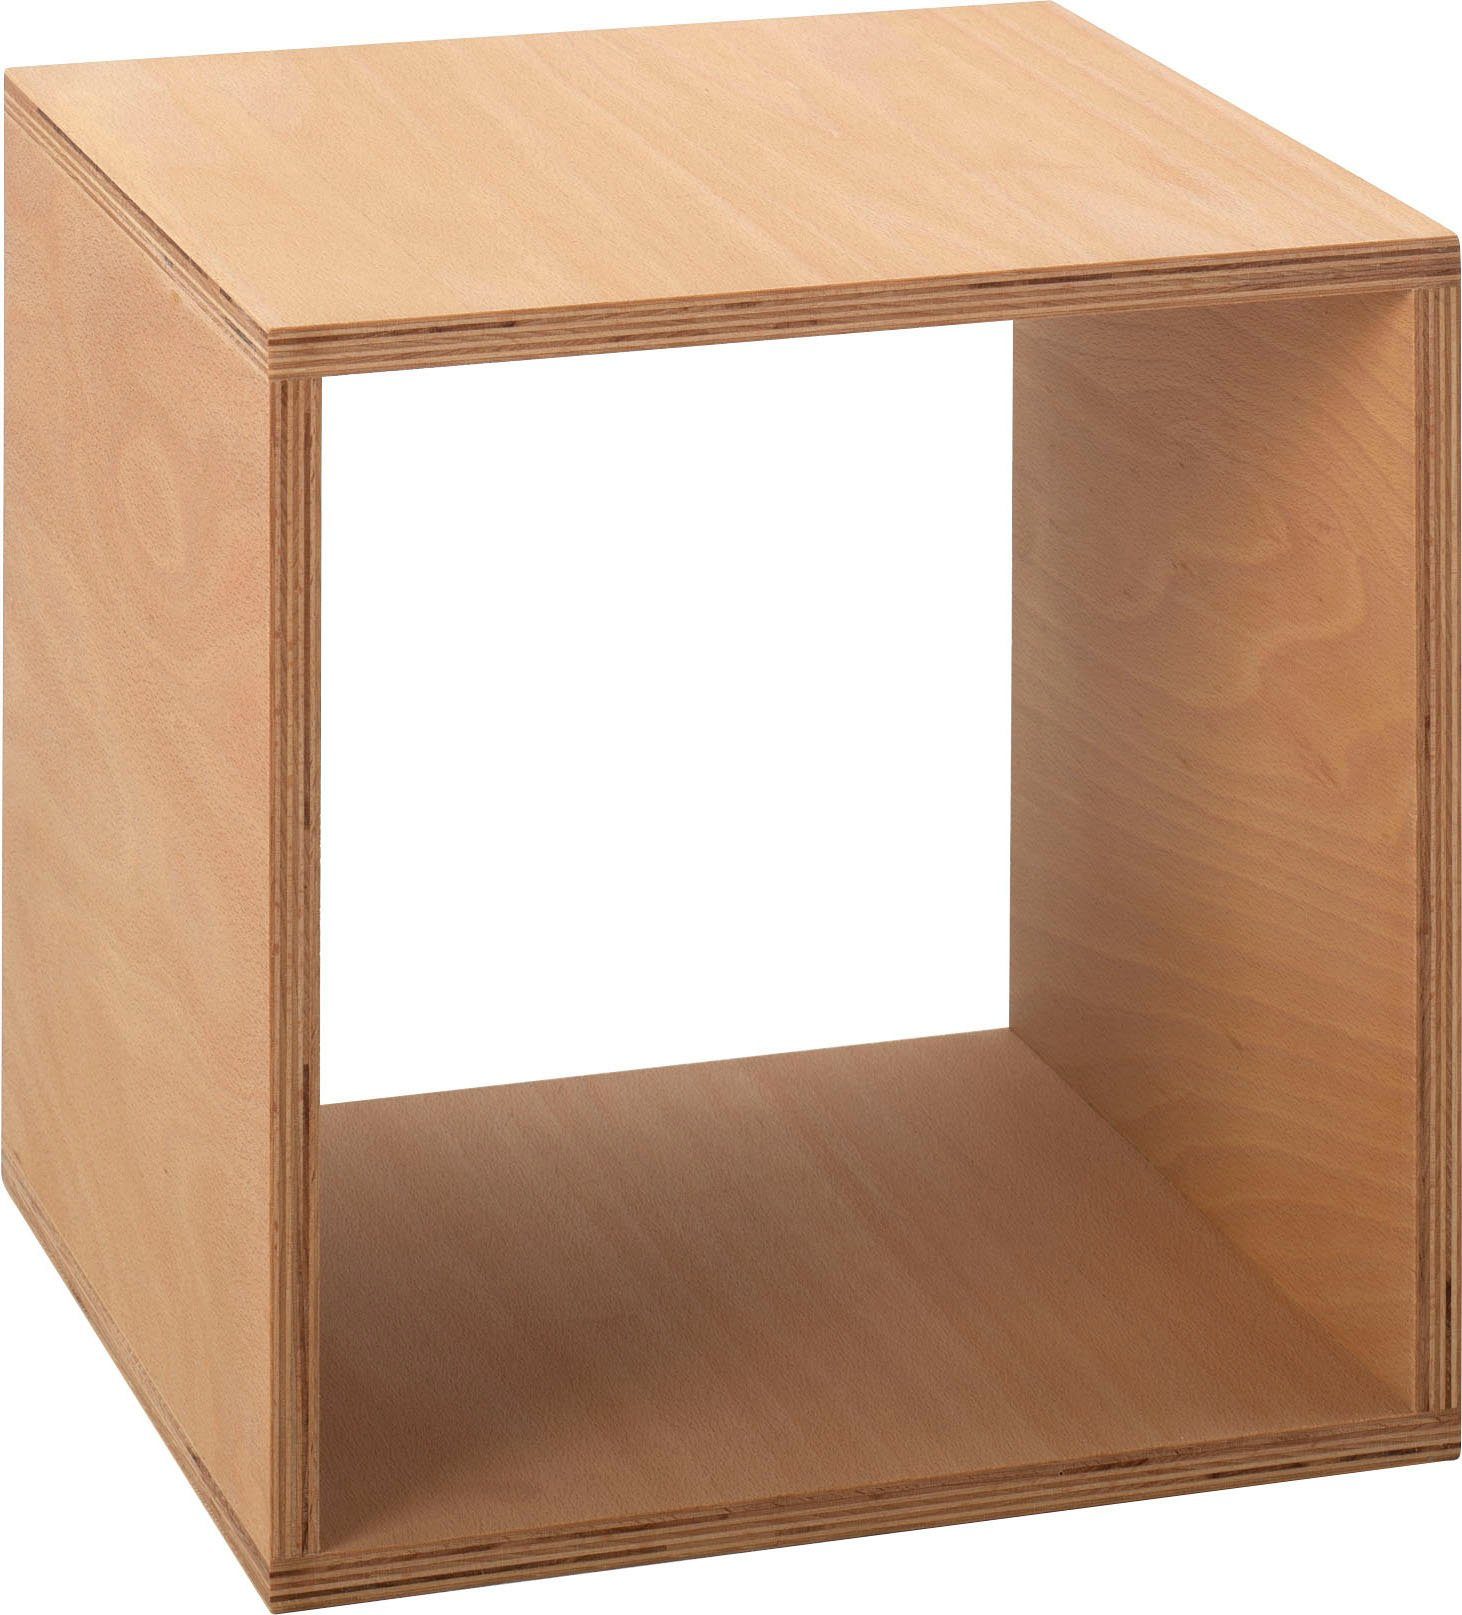 Tojo Beistelltisch geölt, aus cm) Maße Tojo-cube, Multiplex, Buche (35/35/35